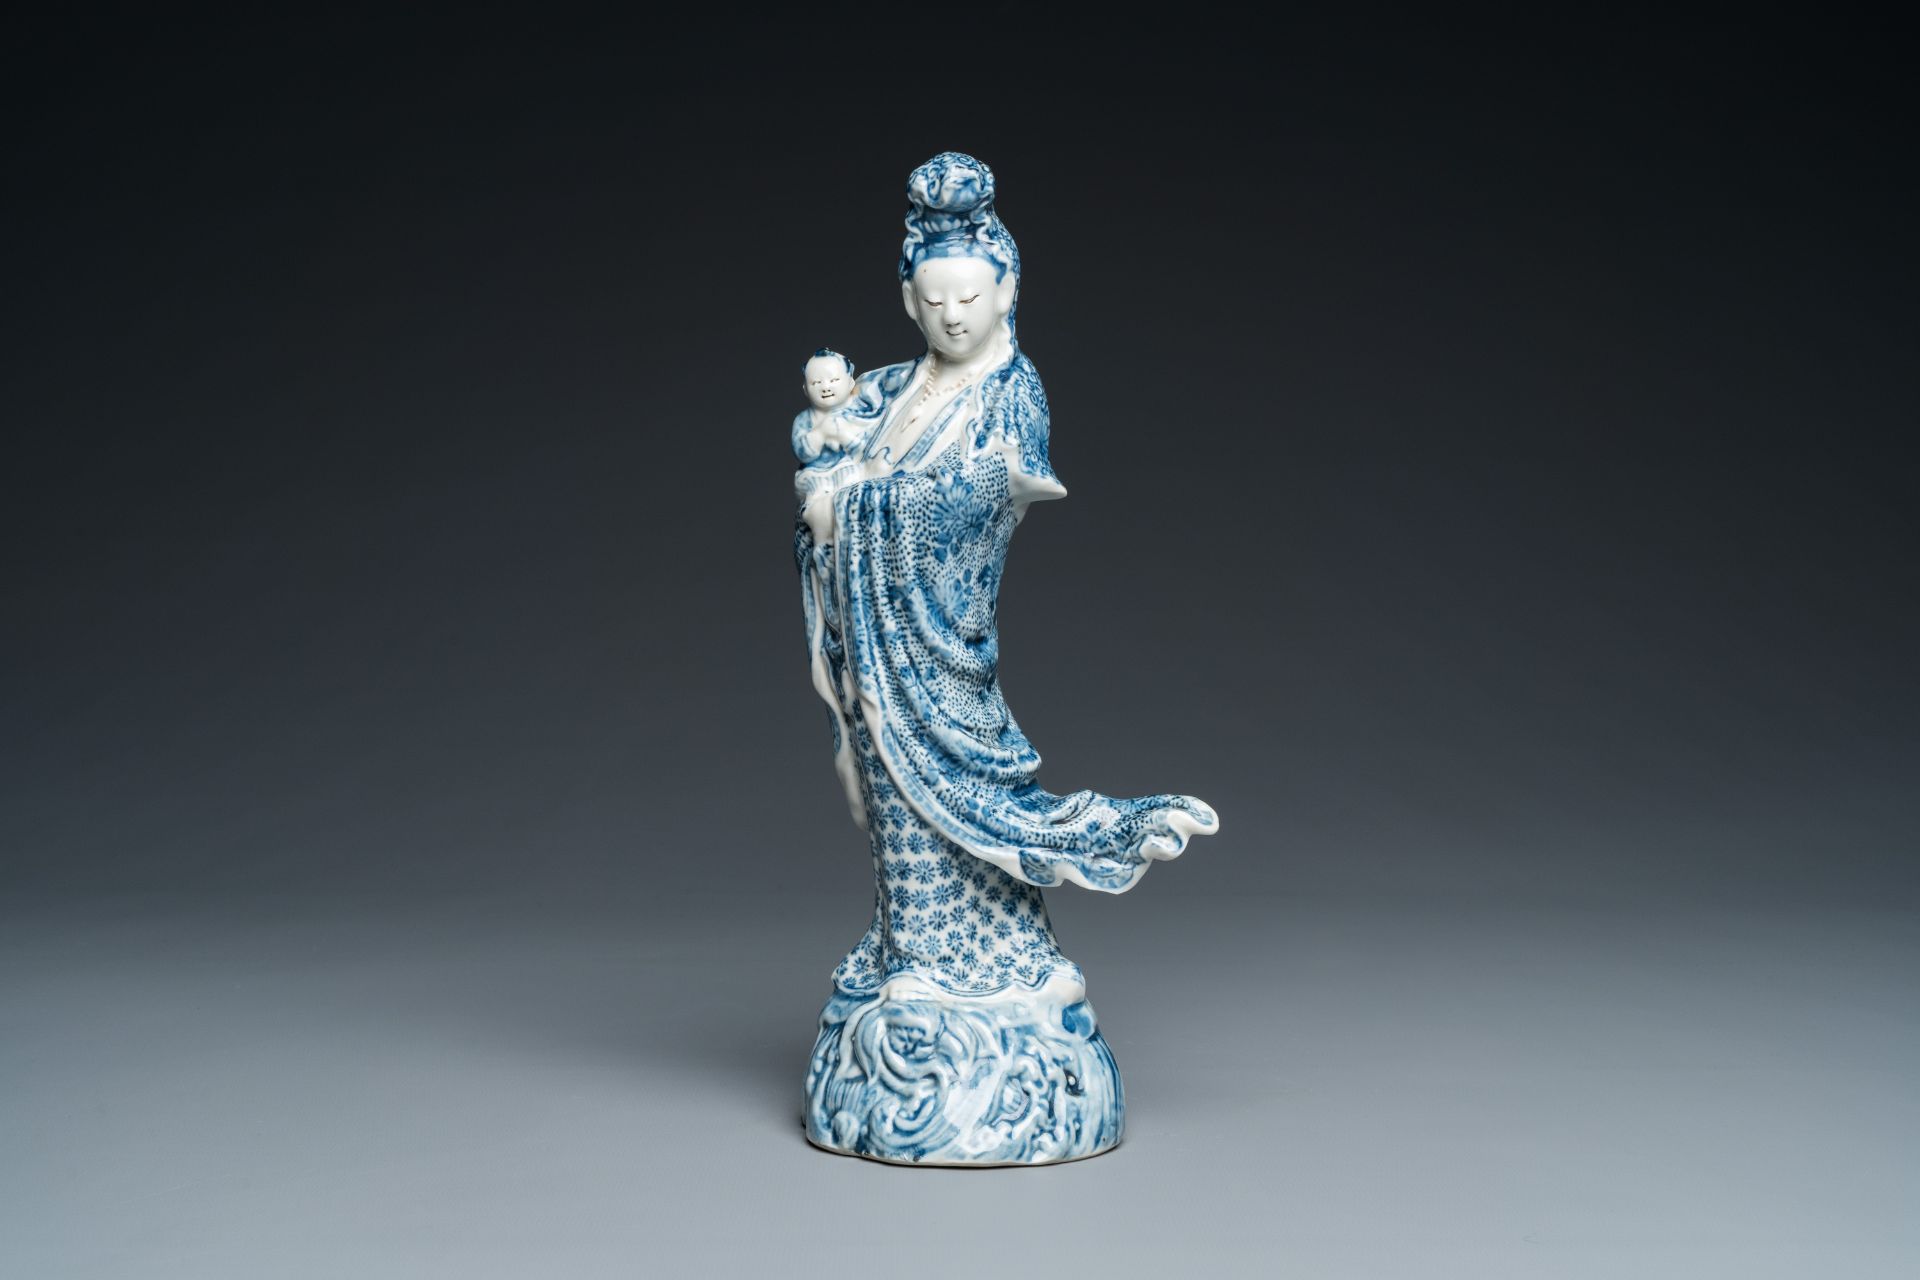 A Chinese blue and white Guanyin with child, Cai Fu Ji ___ mark, Republic